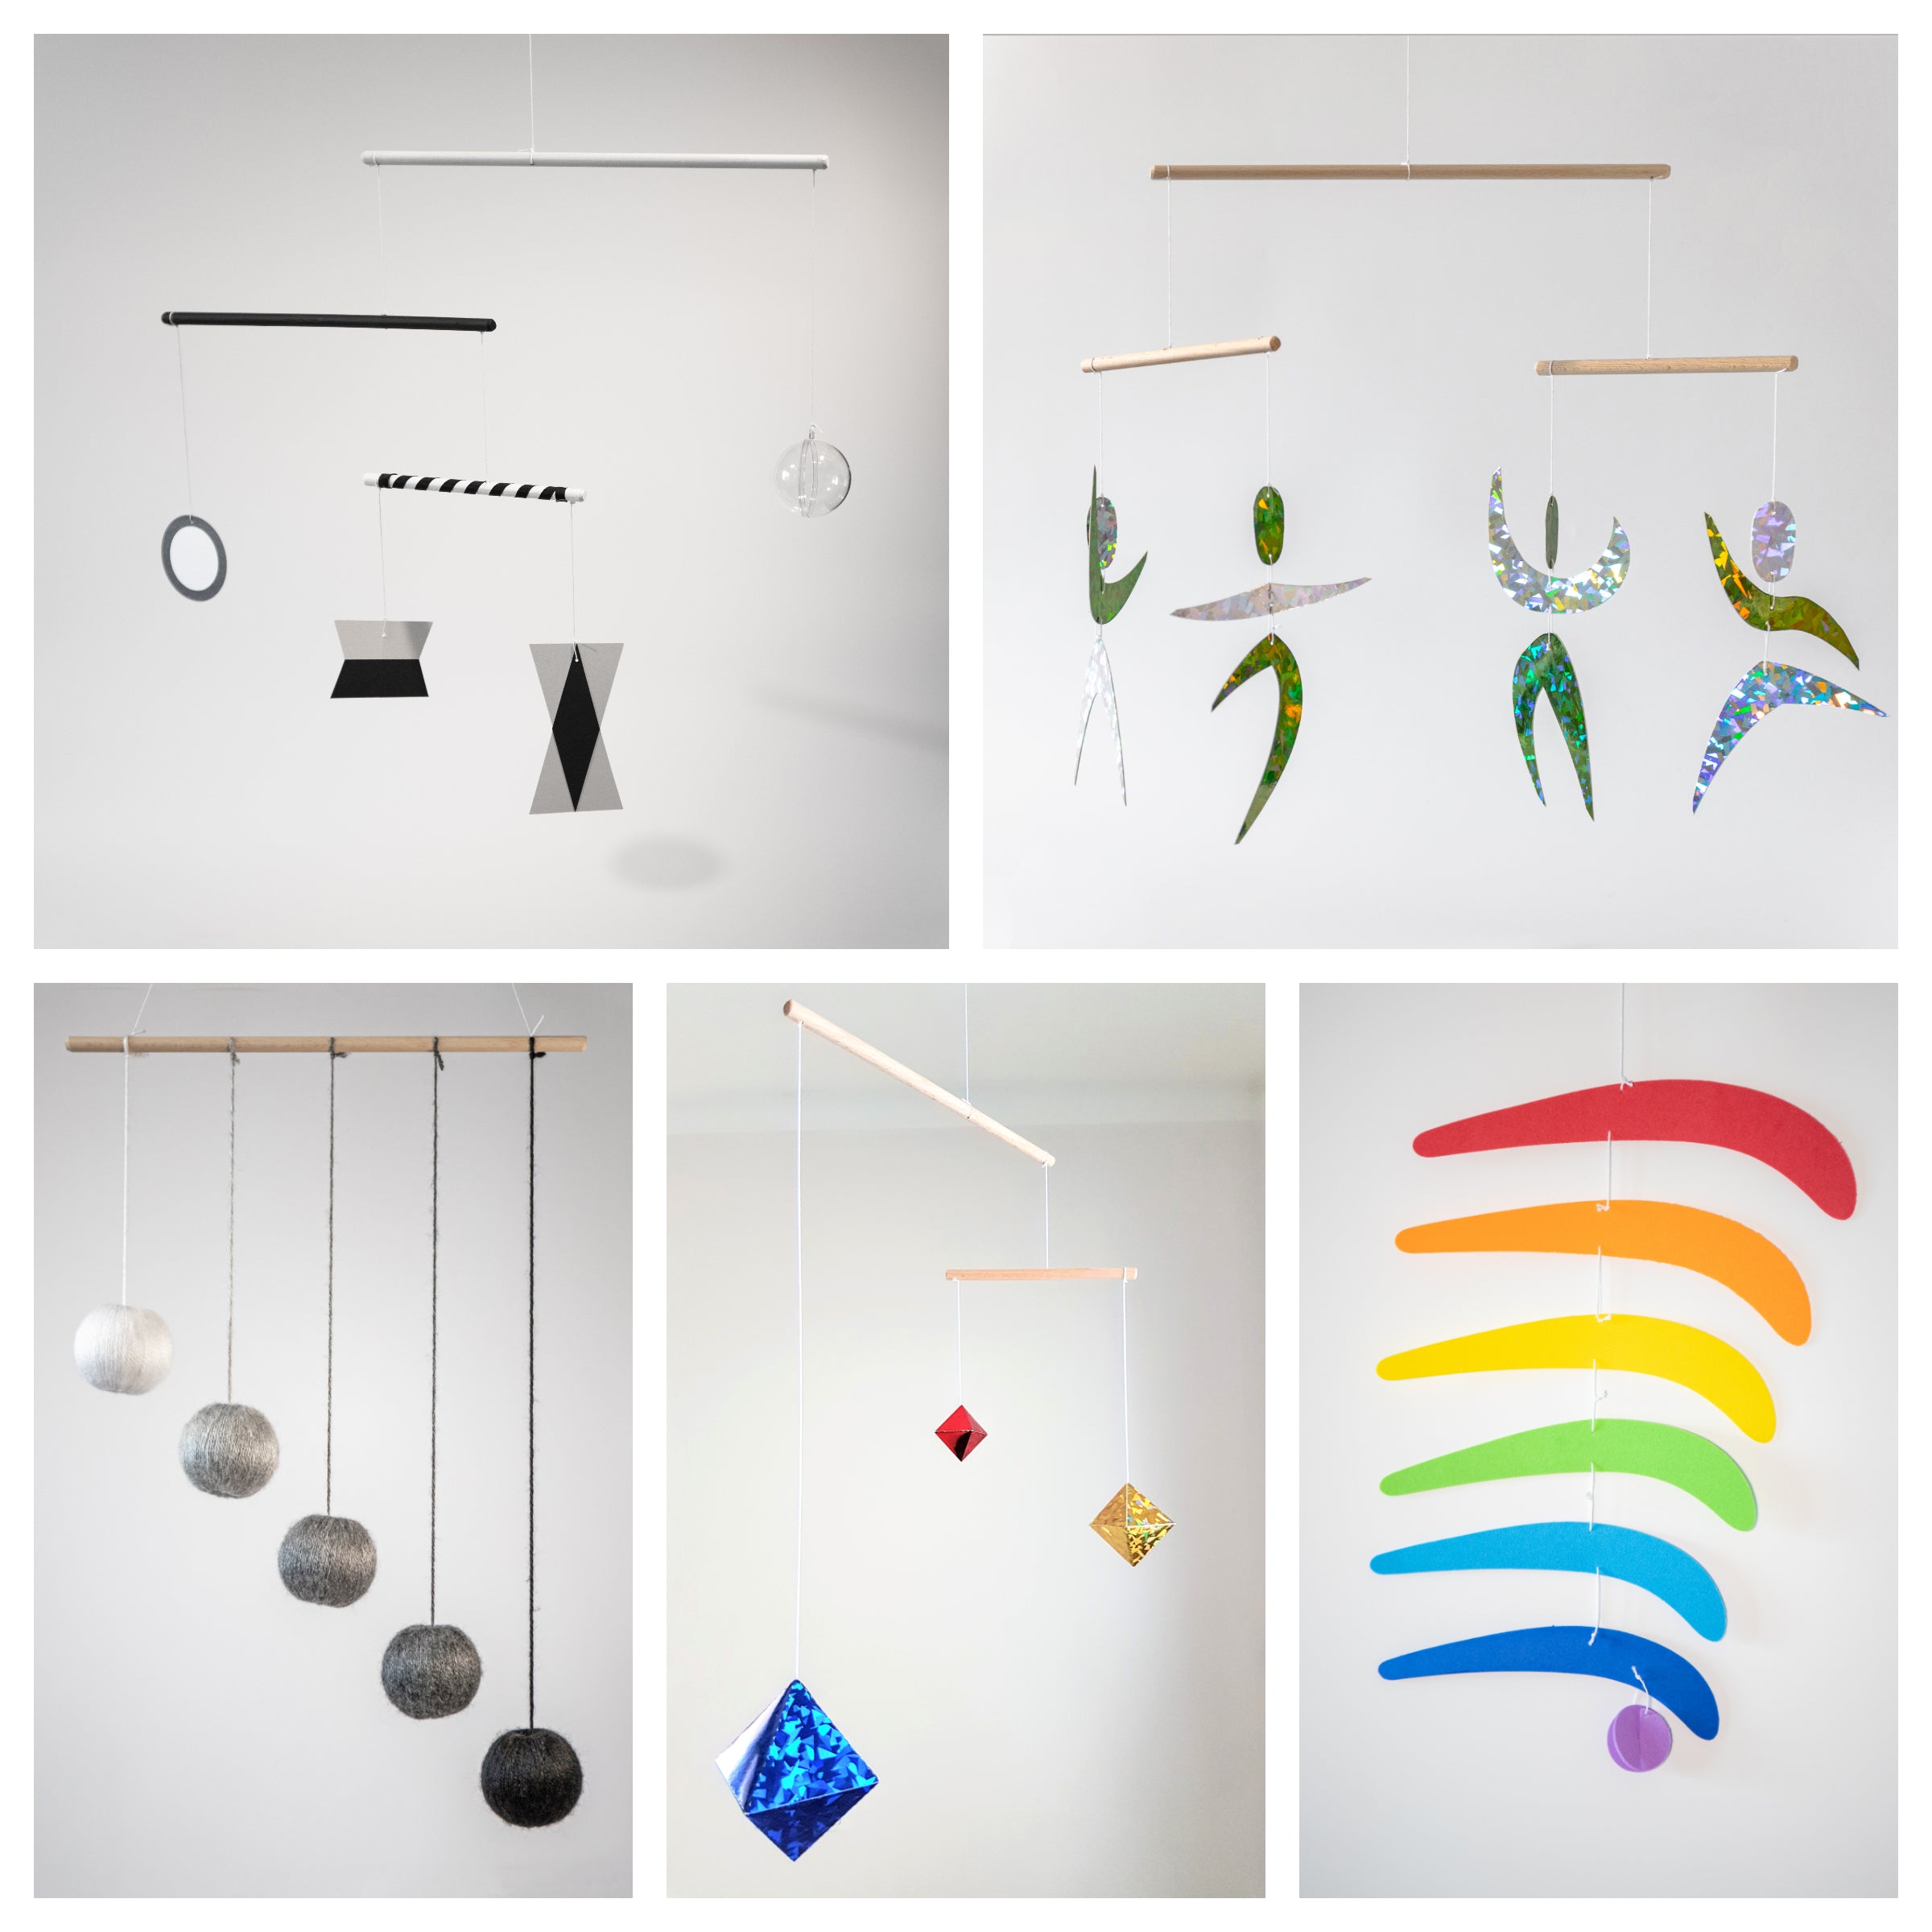 Set of 5 x montessori mobile - Munari, Gray Gobbi, Dancers, Octahedron, Rainbow for baby development. 5setgray